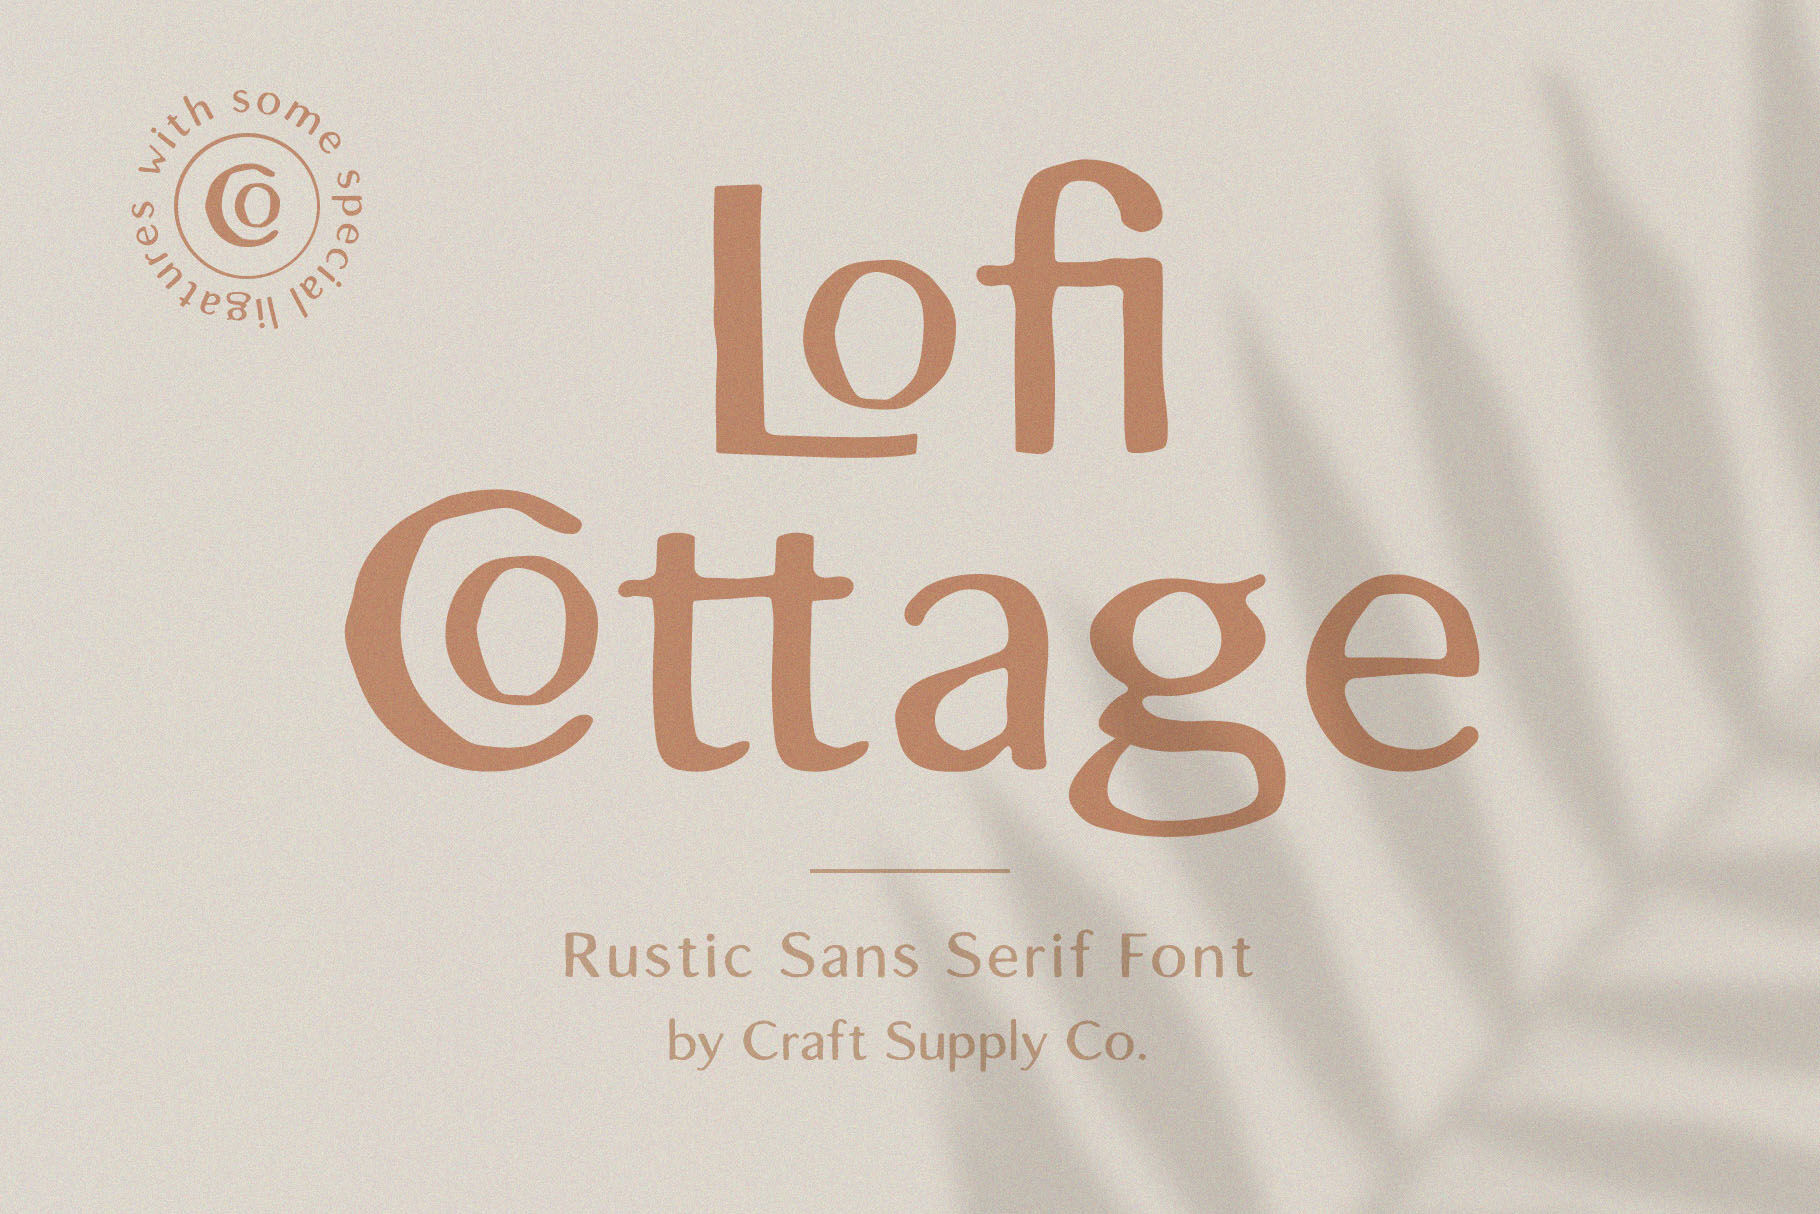 Lofi Cottage Rustic Sans Serif By Craft Supply Co Thehungryjpeg Com